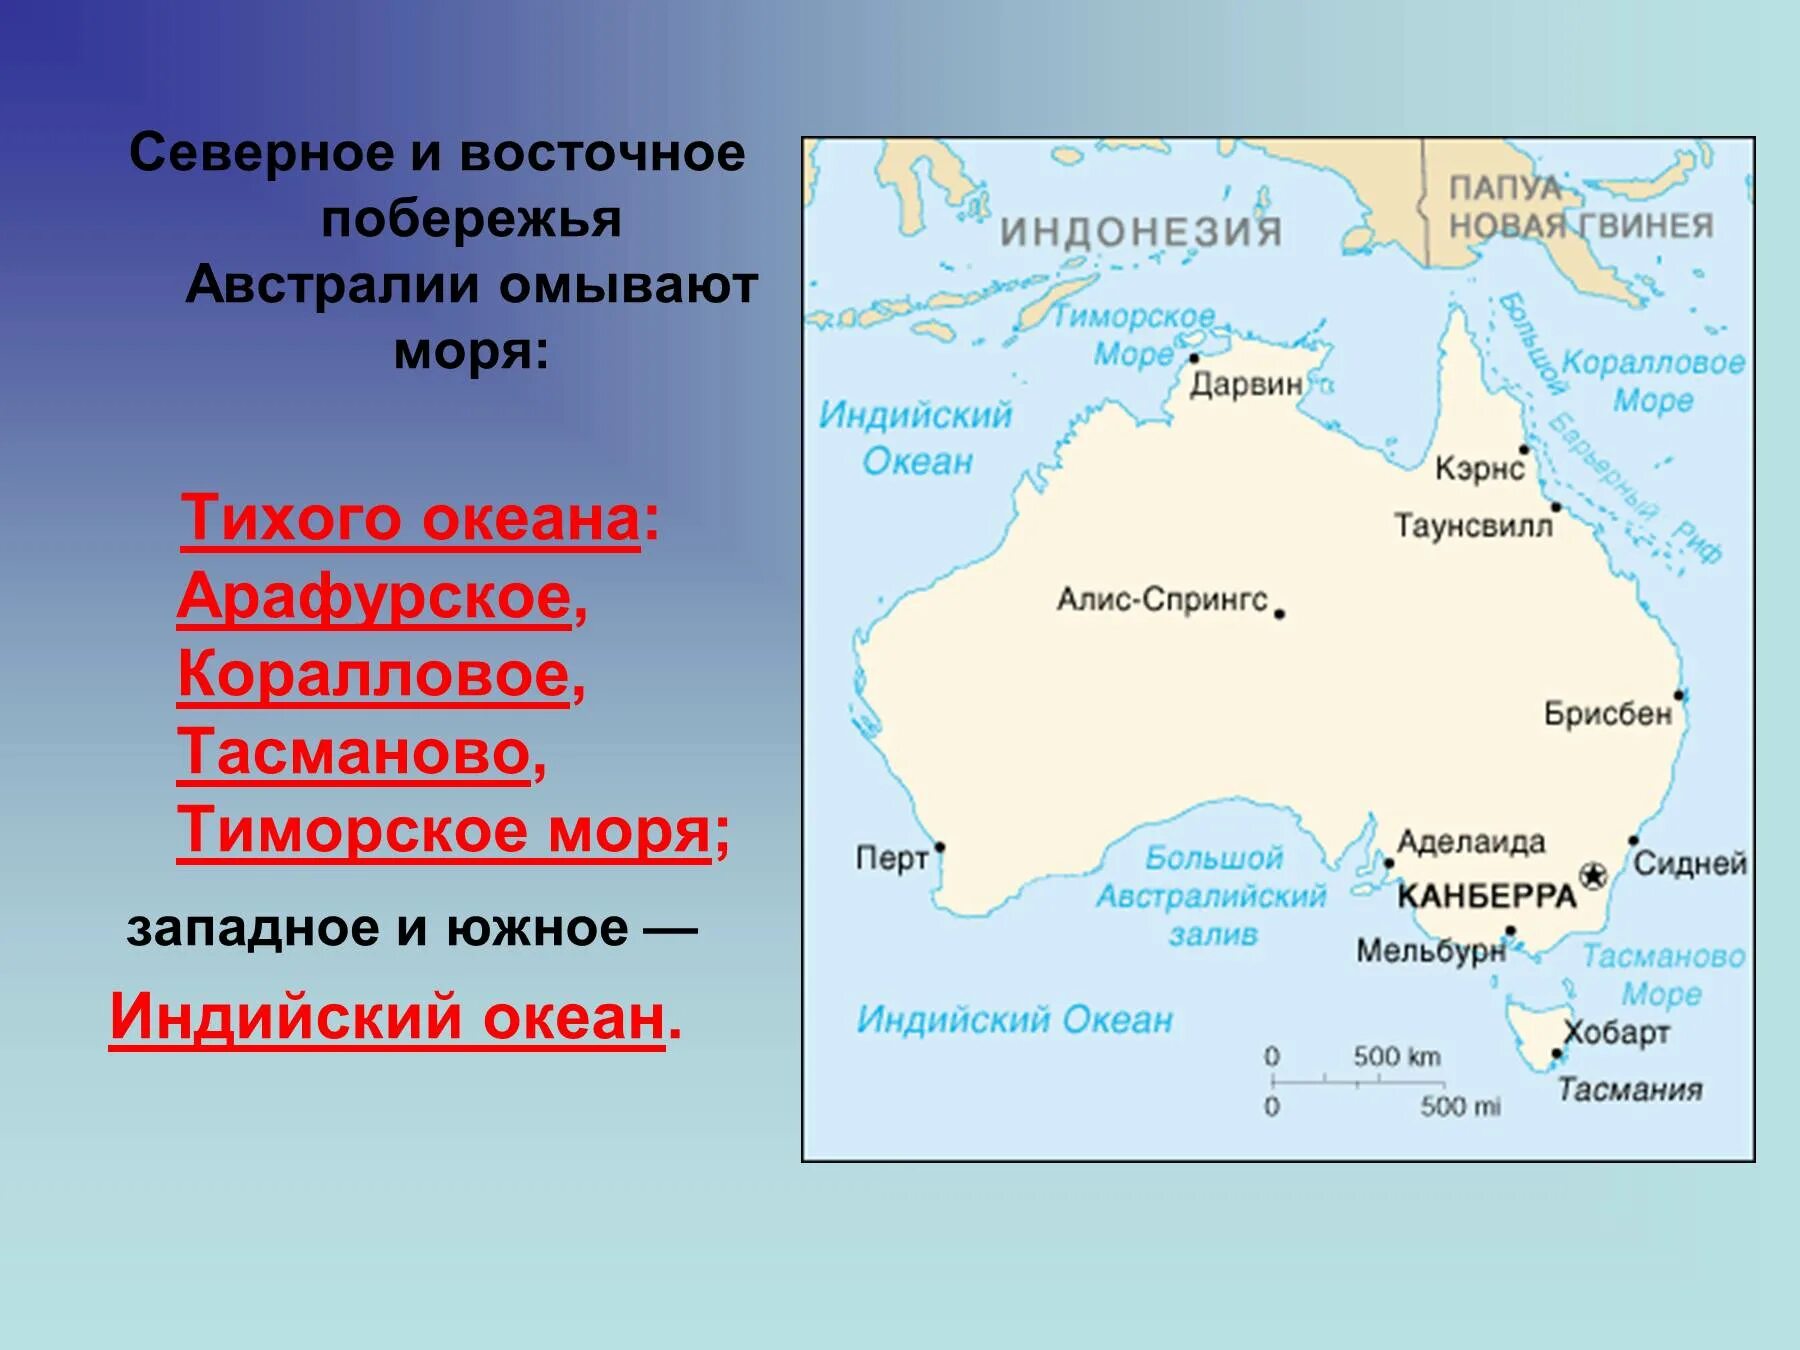 Моря: тасманово, Тиморское, коралловое, Арафурское.. Тасманово море на карте Австралии. Австралия моря тасманово коралловое и Арафурское. Австралия моря и океаны омывающие материк.